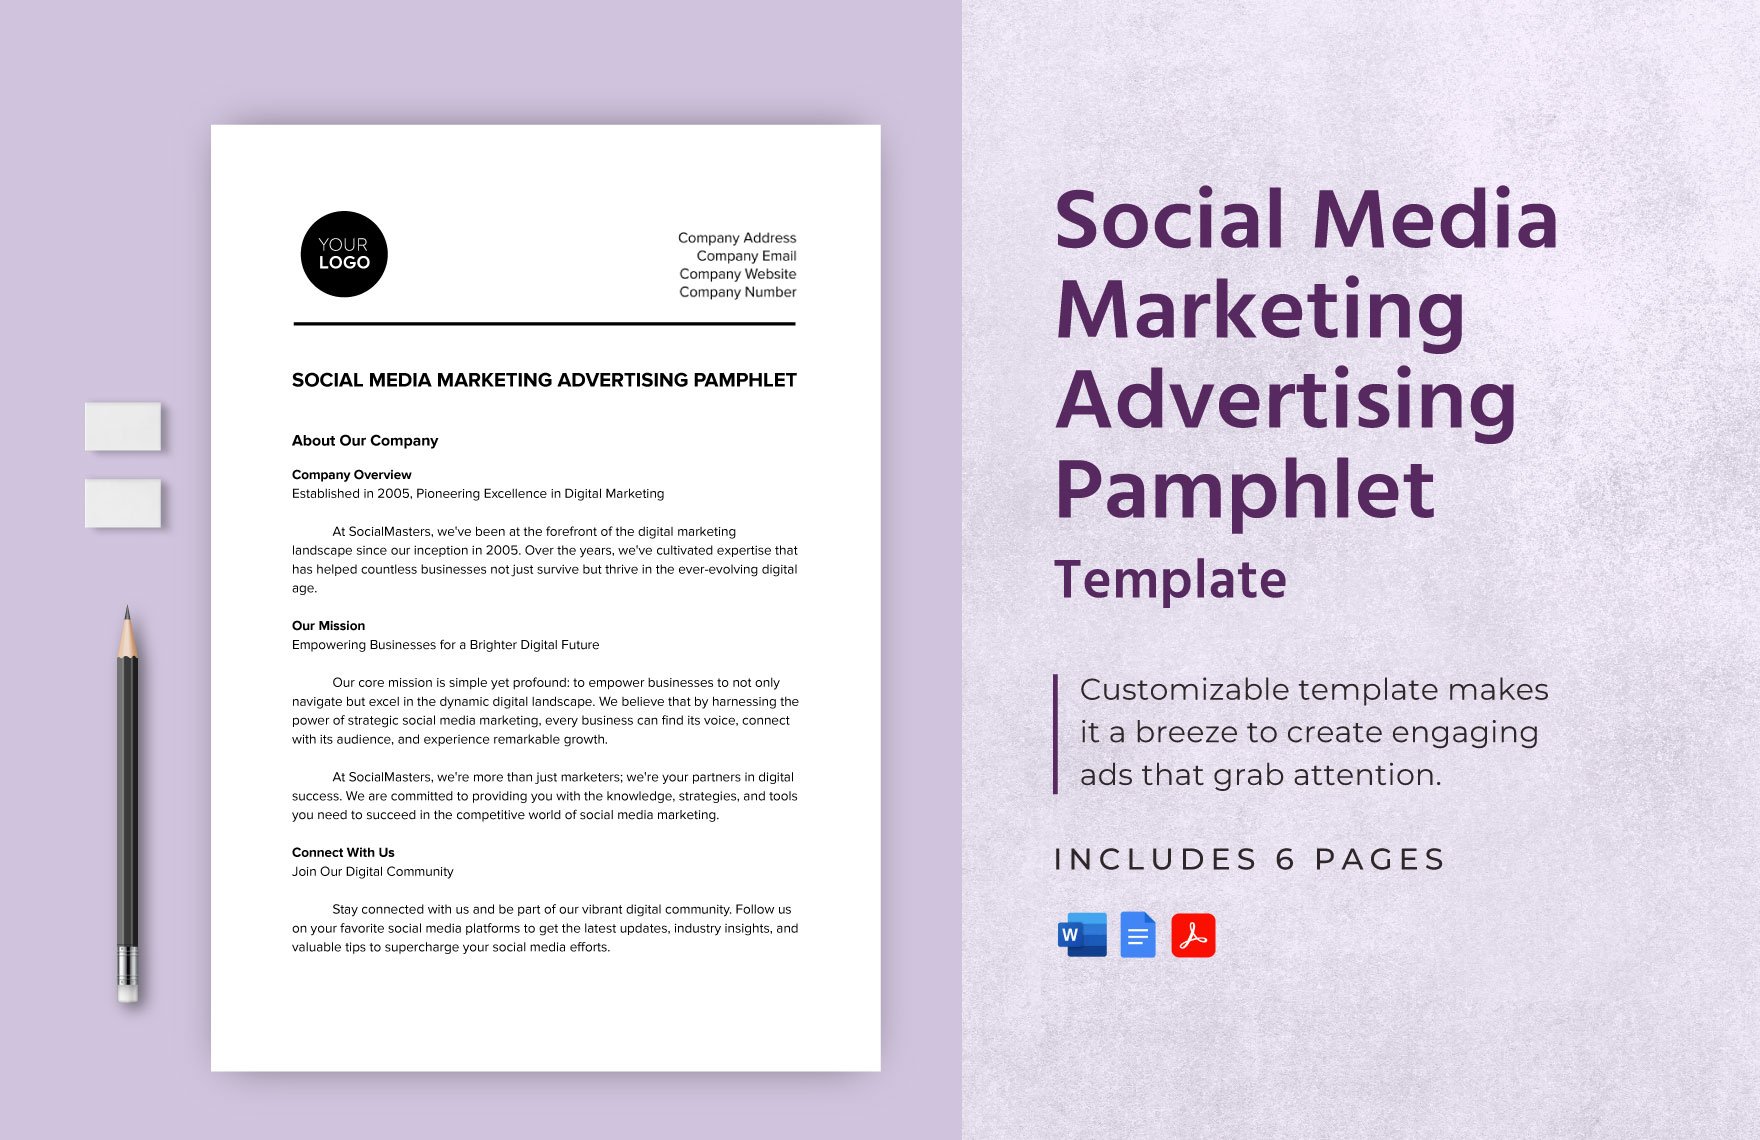 Social Media Marketing Advertising Pamphlet Template